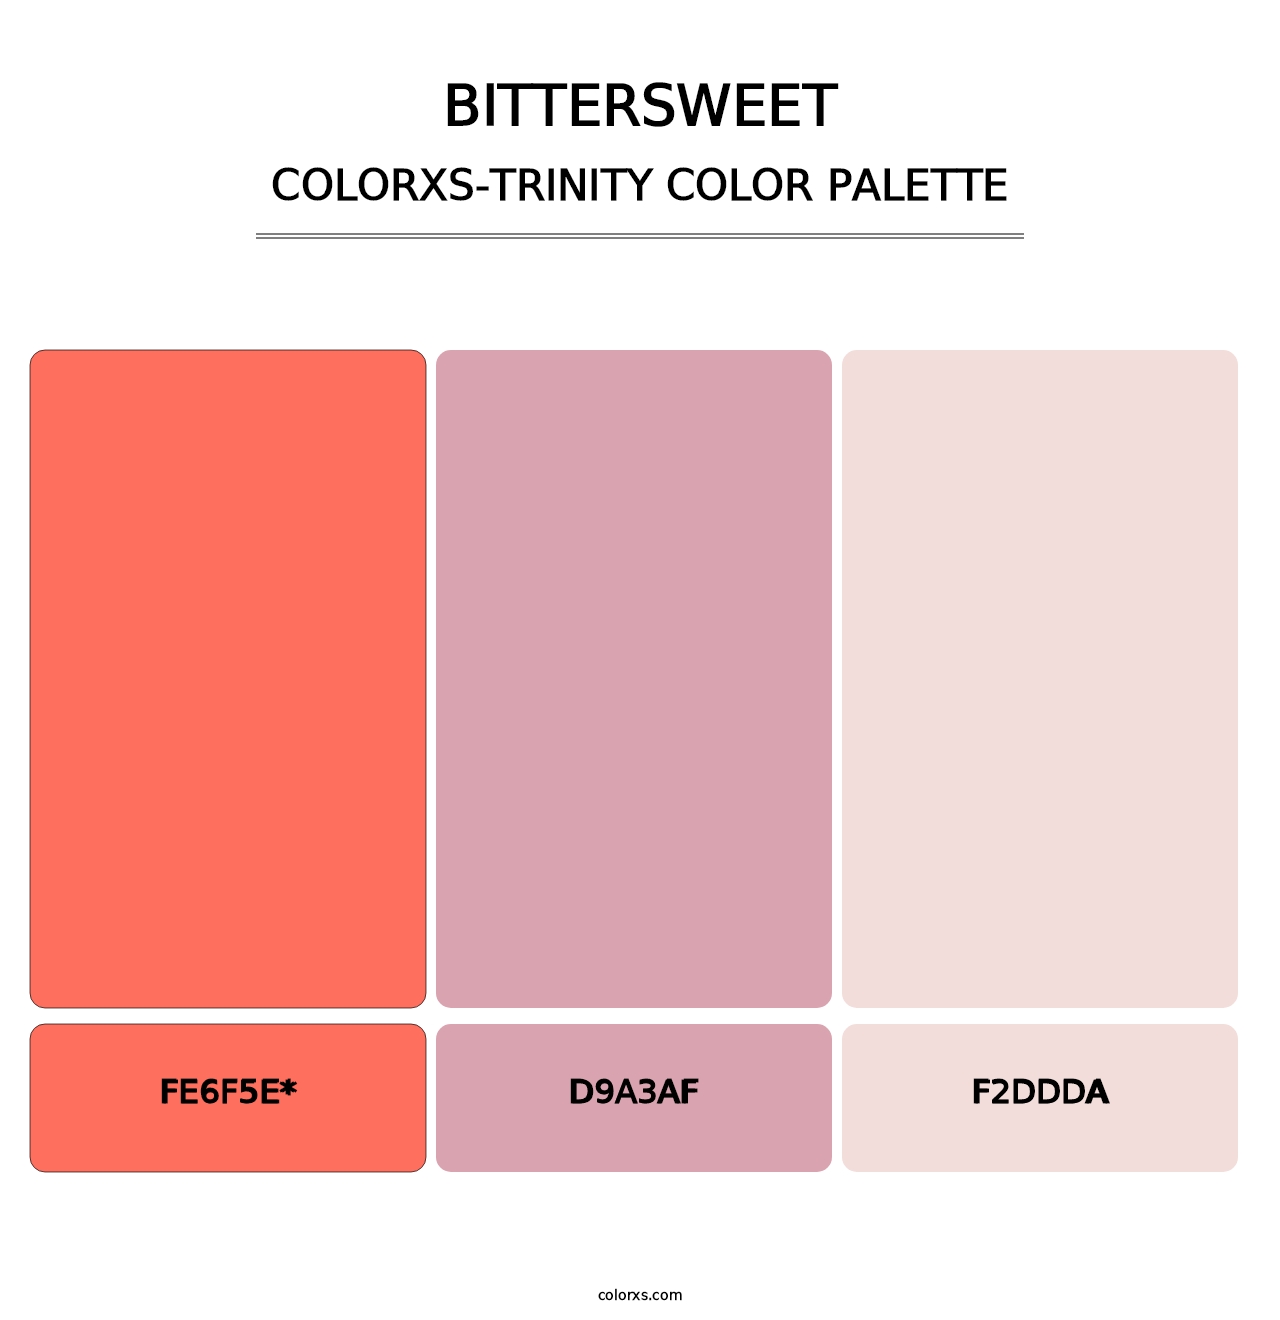 Bittersweet - Colorxs Trinity Palette